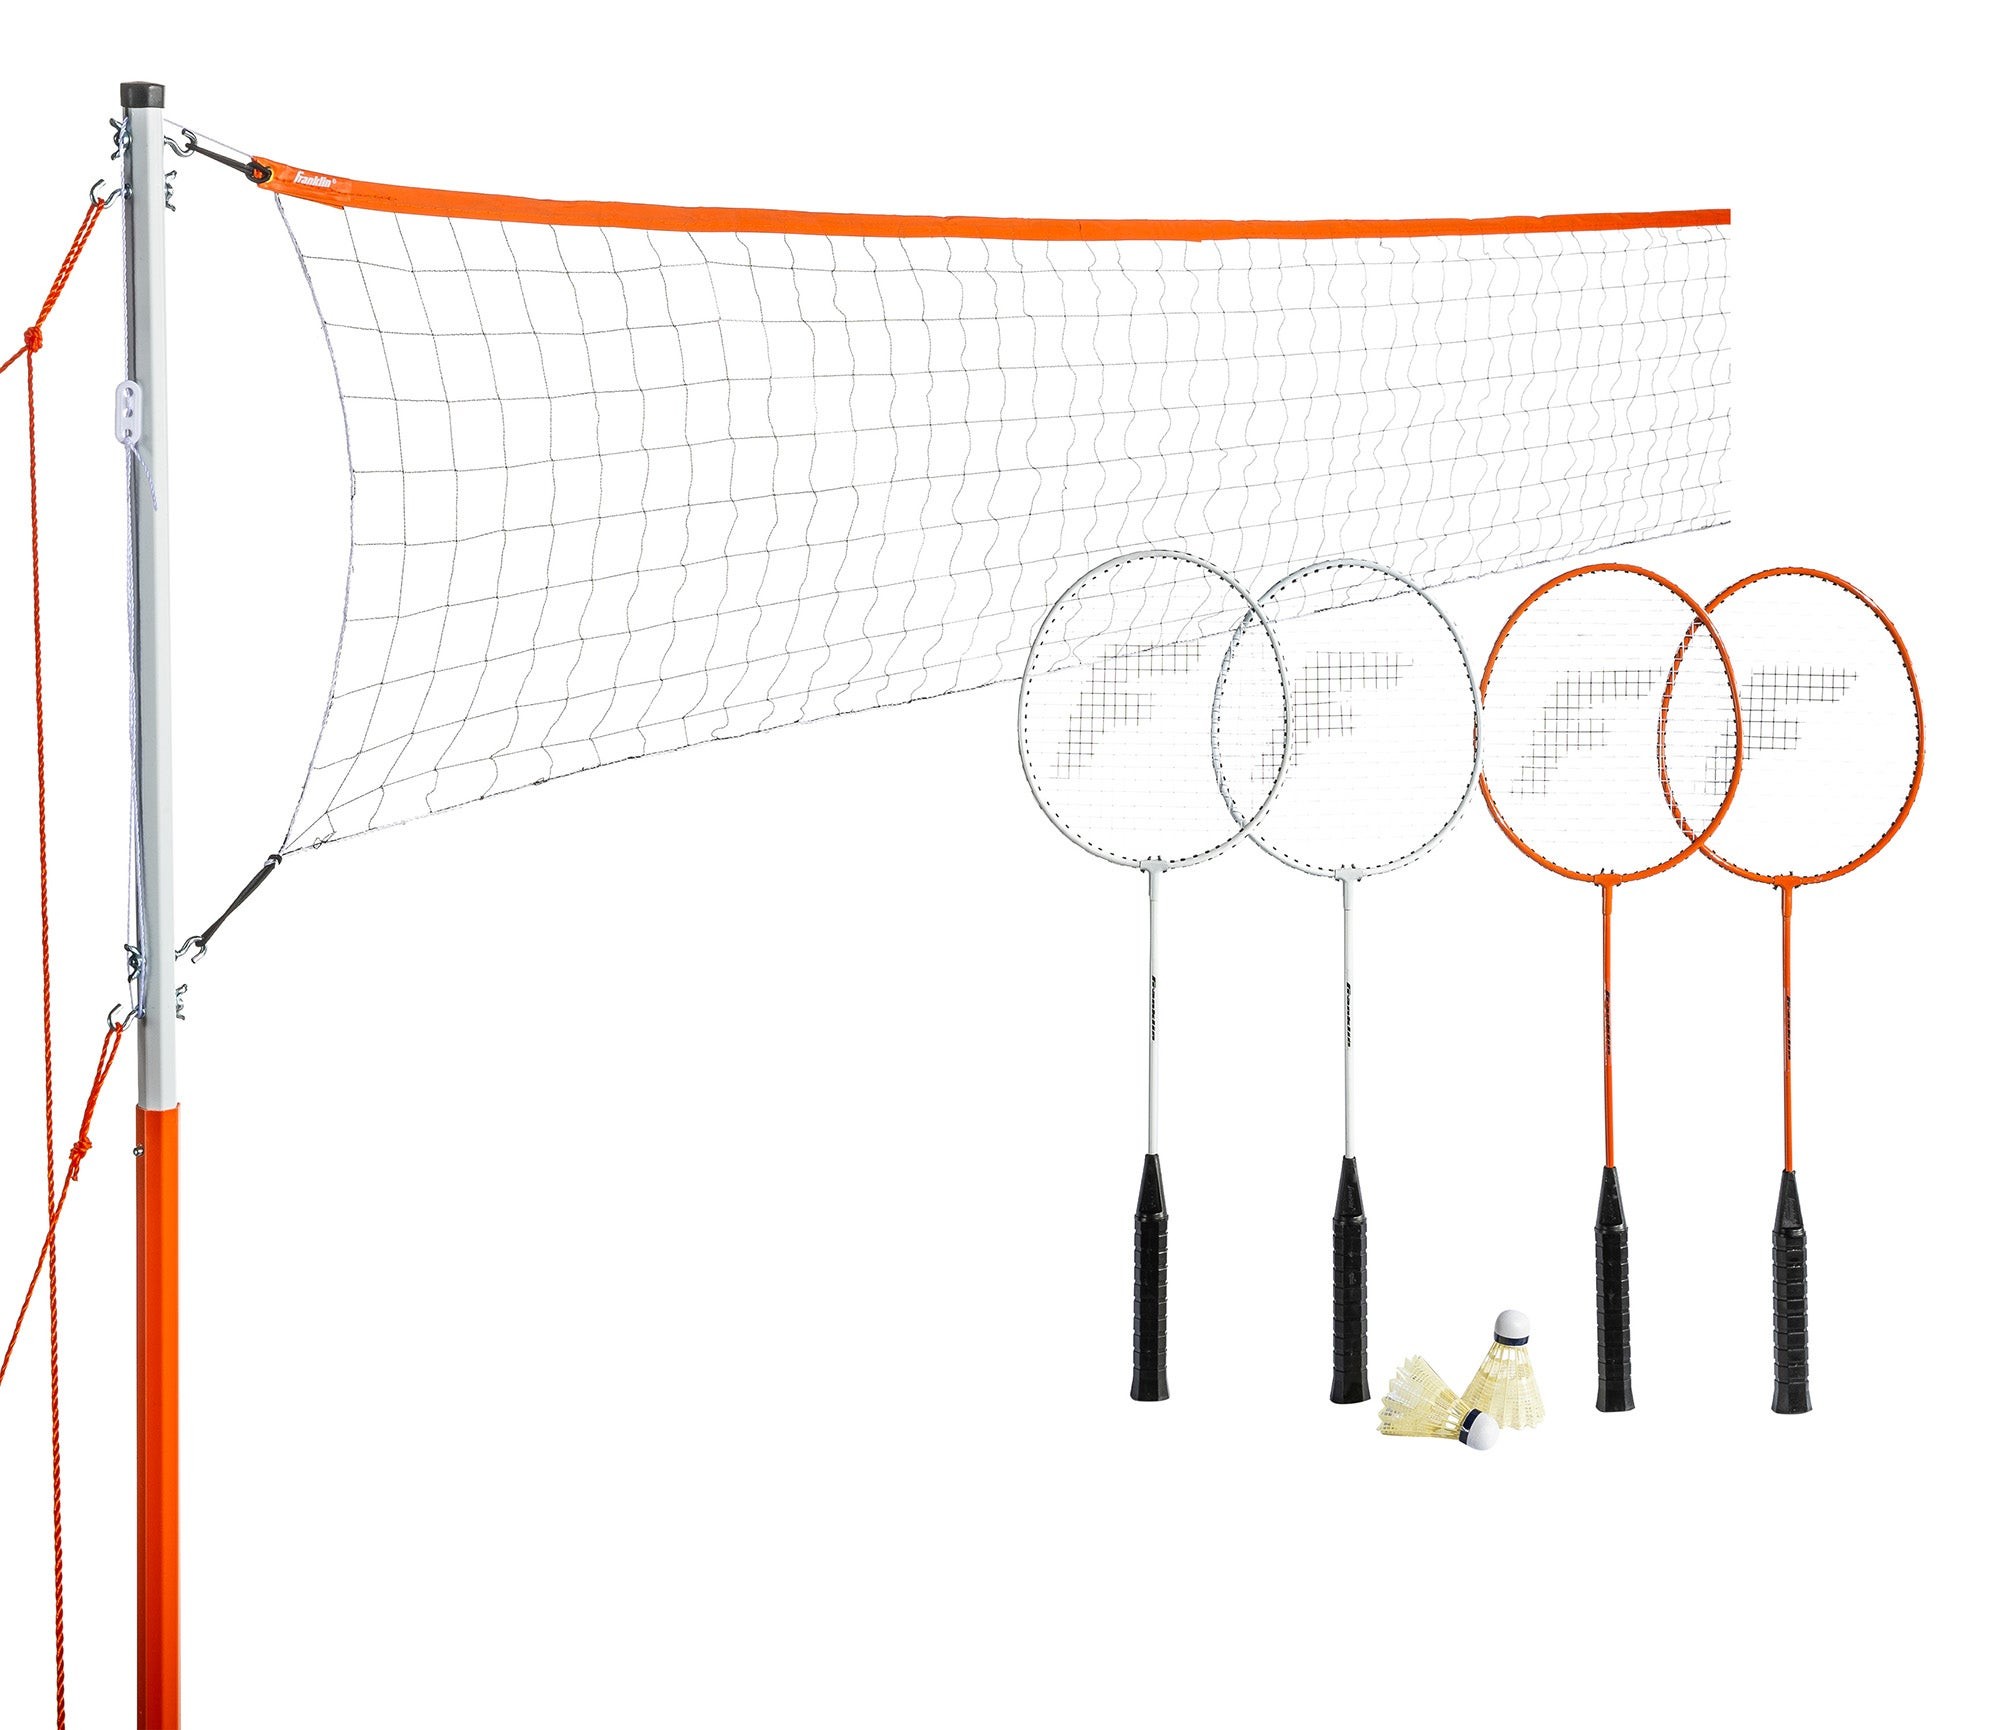 Starter Badminton Set